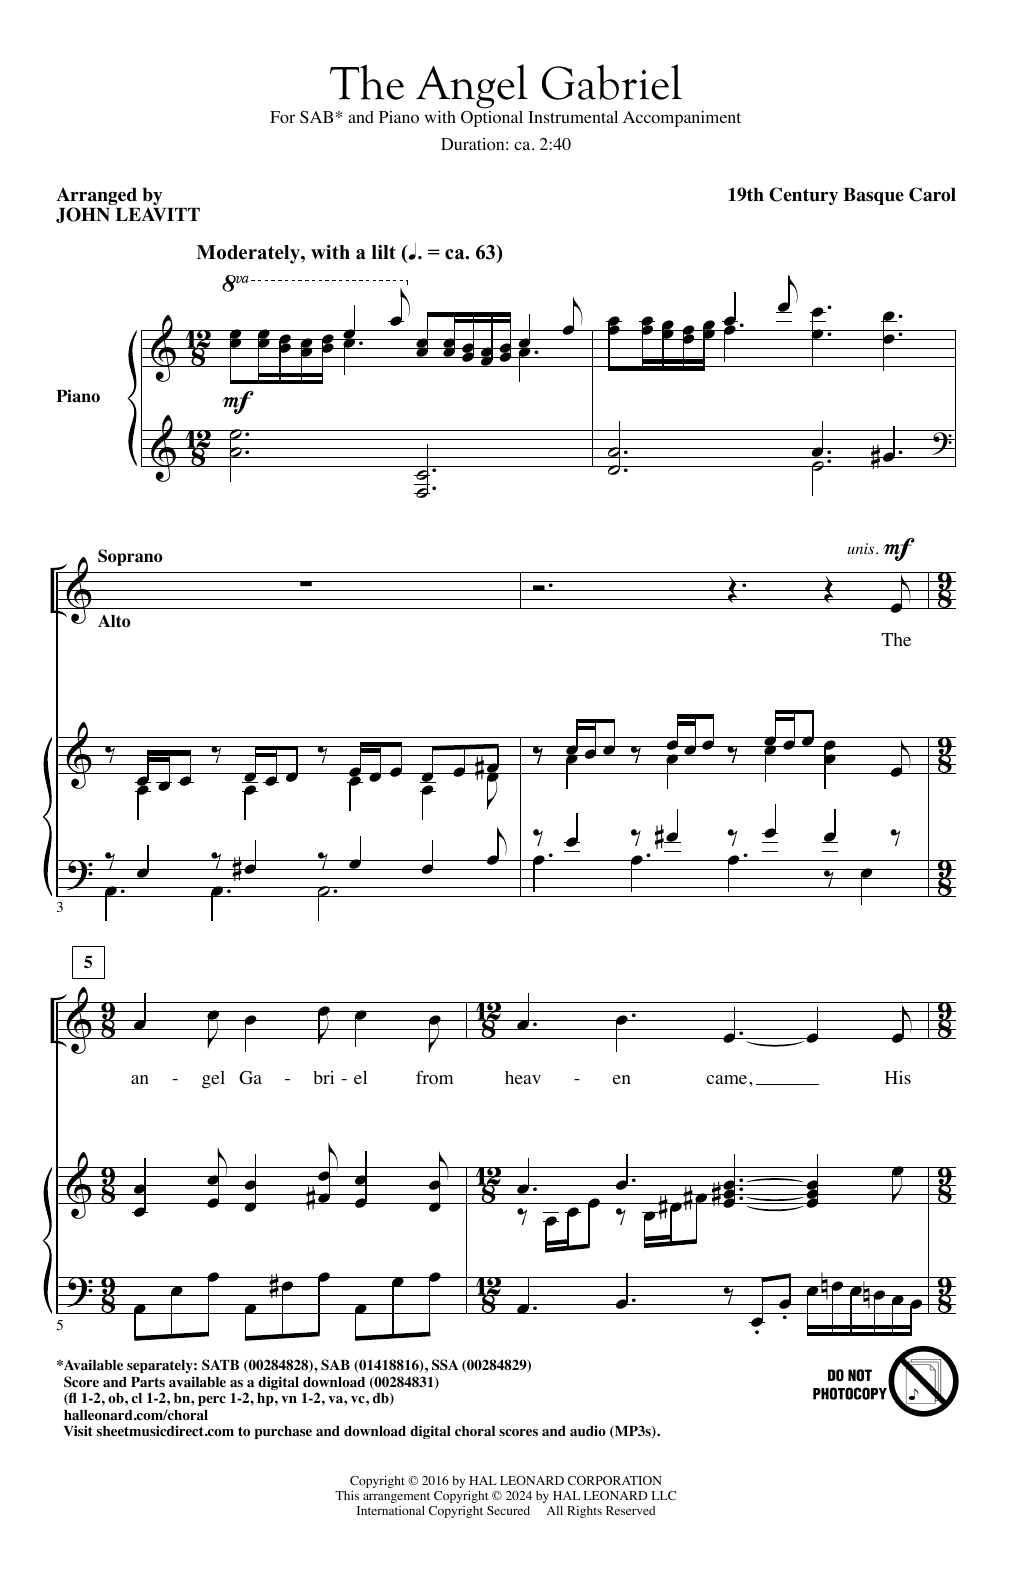 19th Century Basque Carol The Angel Gabriel (arr. John Leavitt) Sheet Music Notes & Chords for SAB Choir - Download or Print PDF